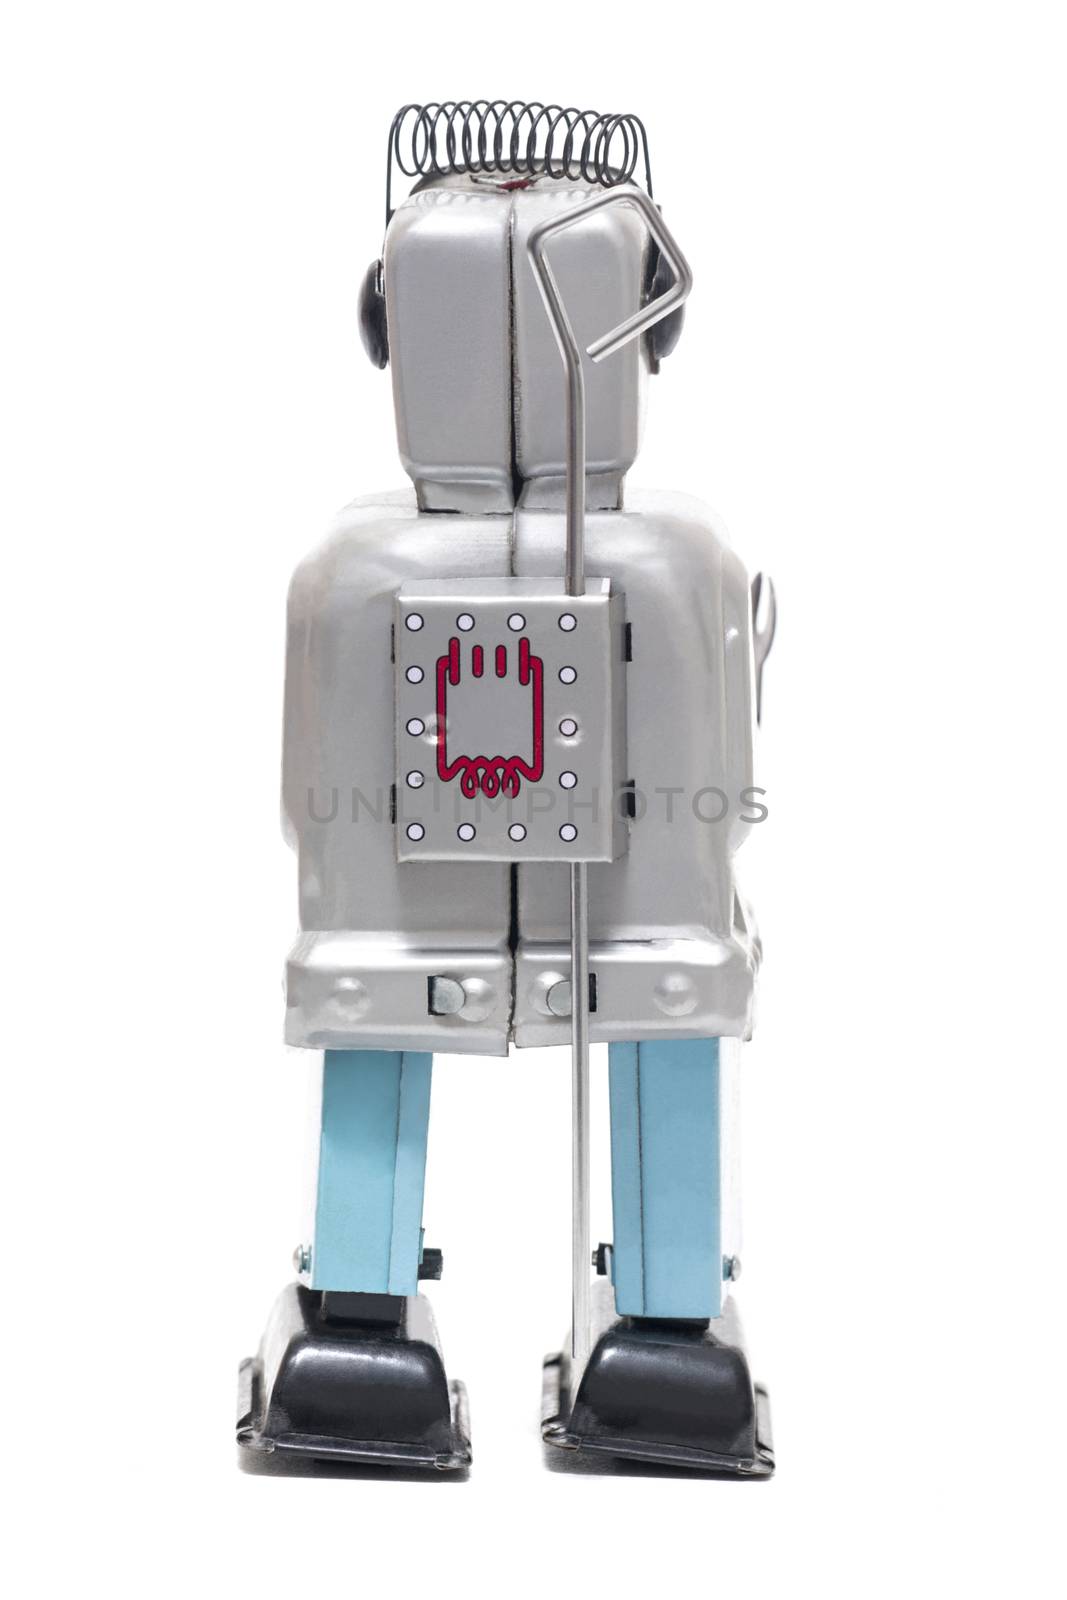 tin toy robot by membio